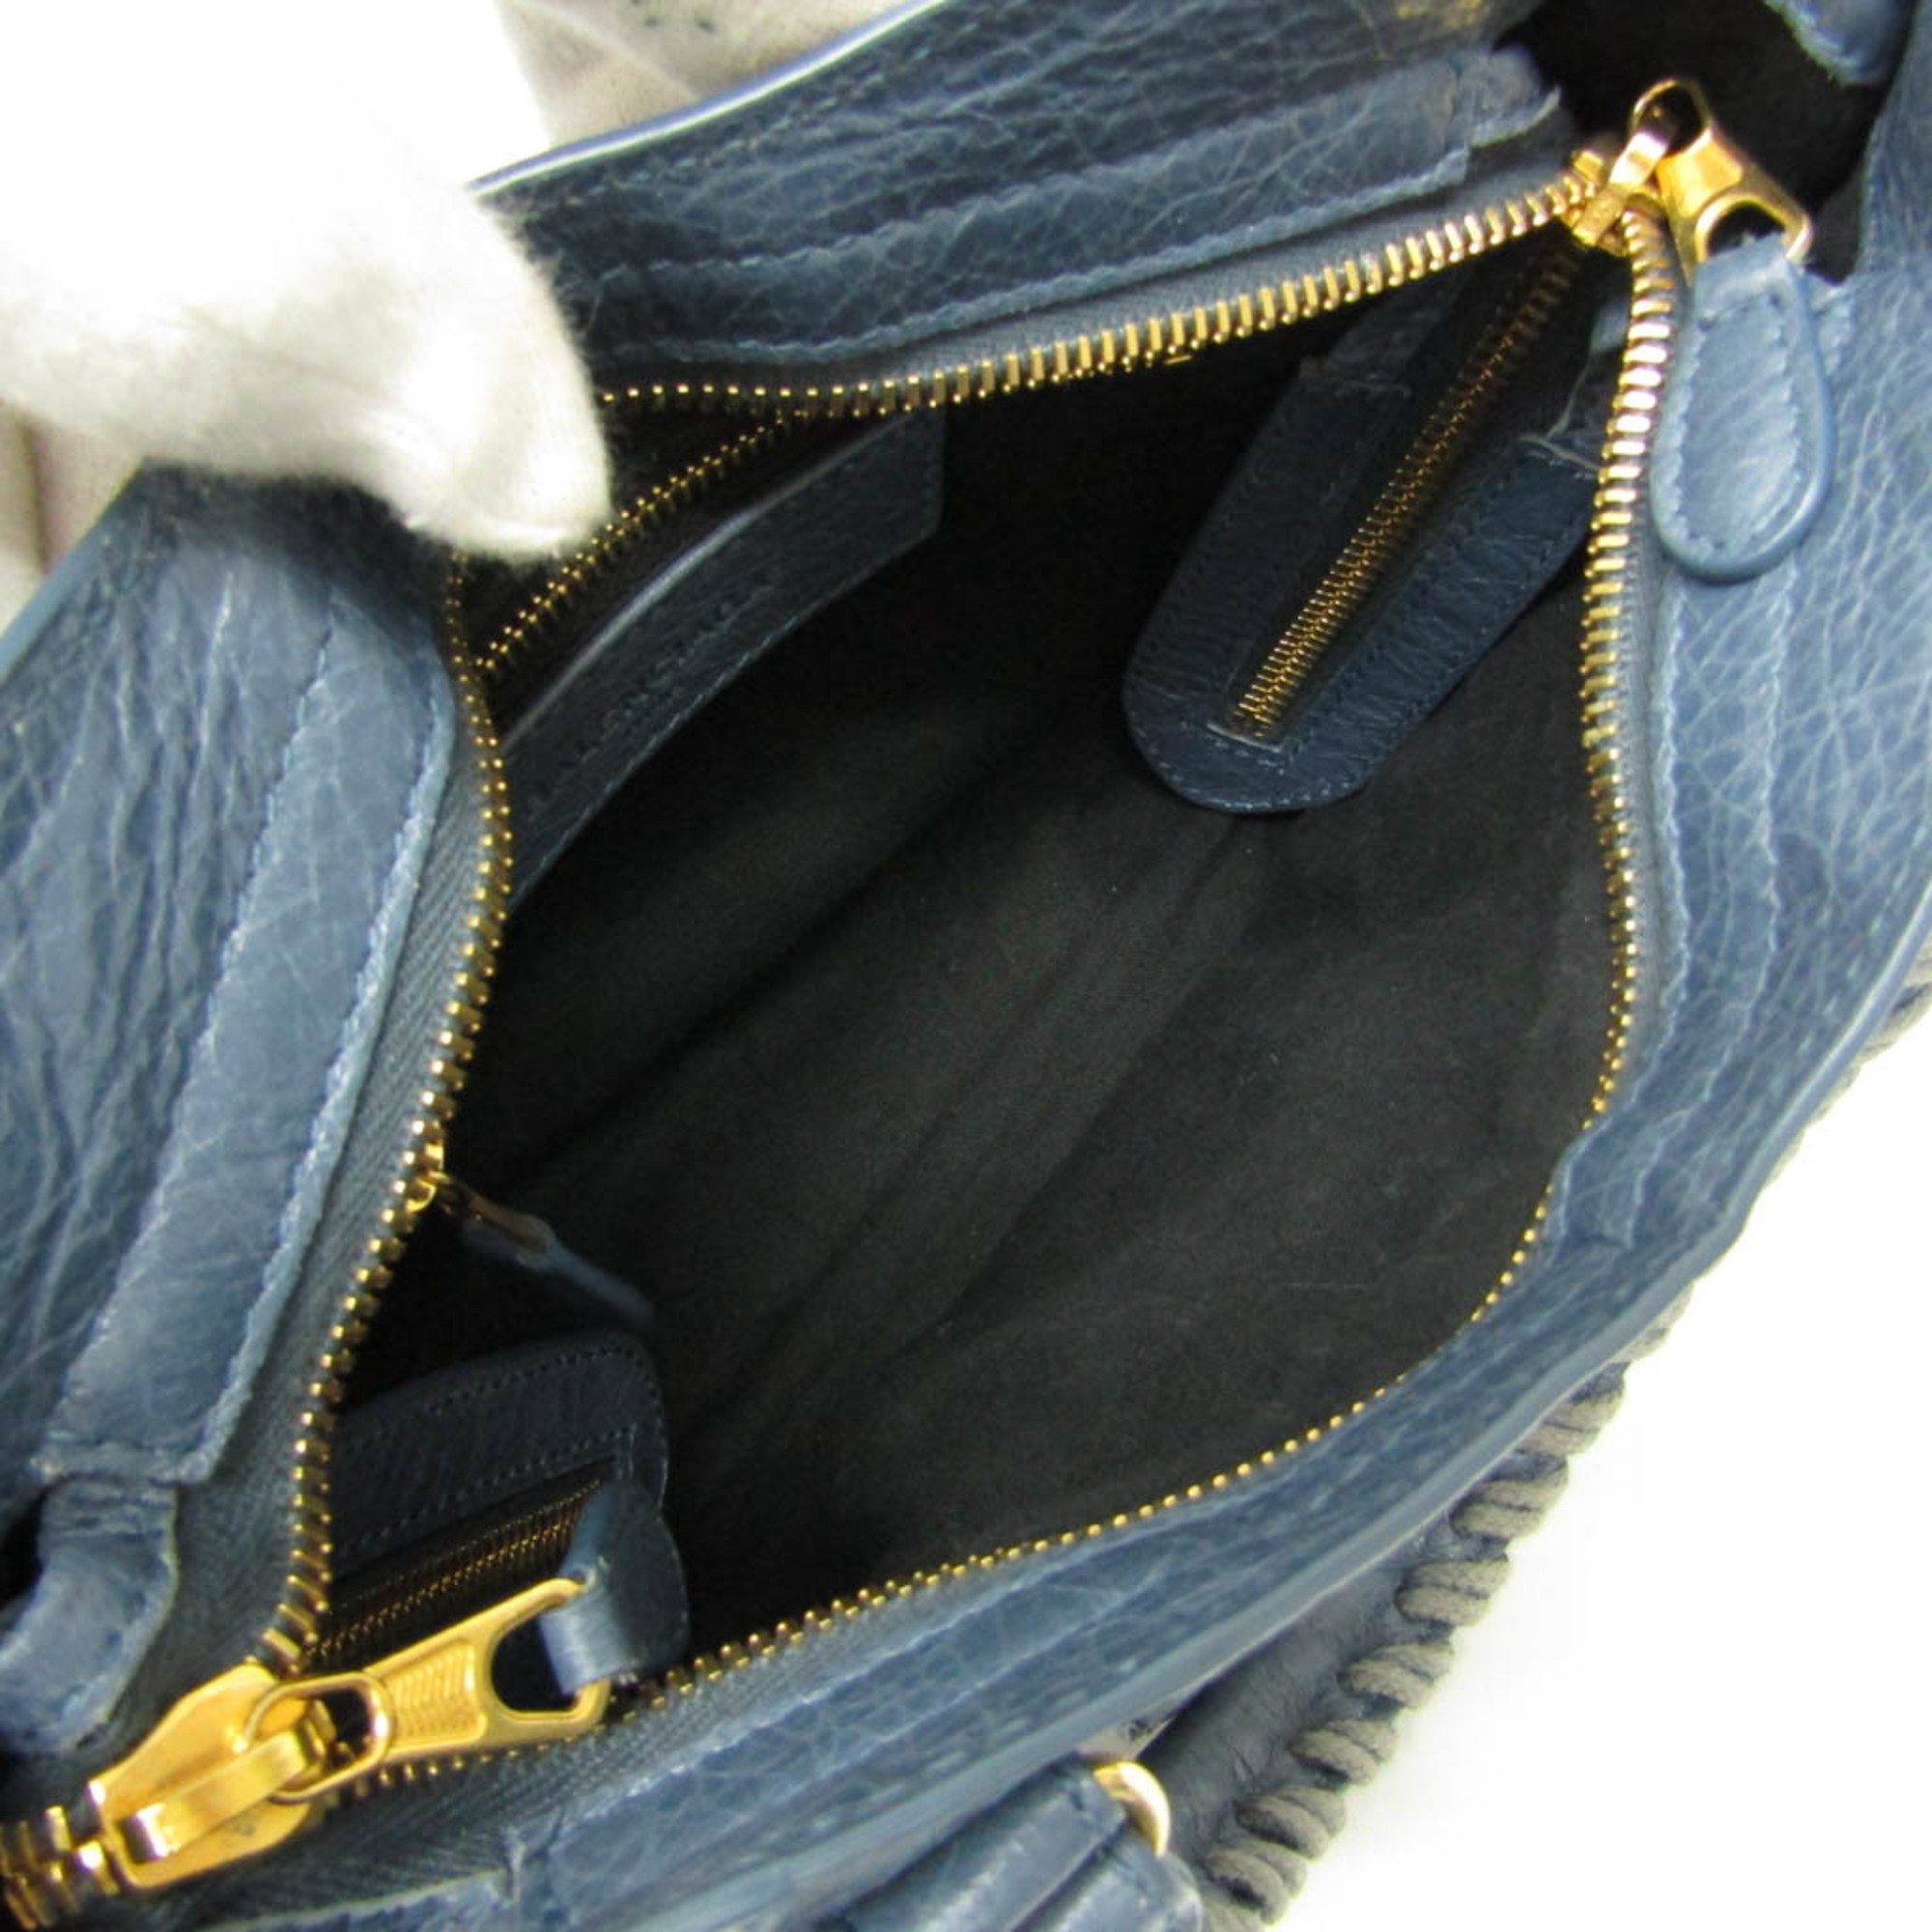 Balenciaga Giant Mini City 309544 Women's Leather Handbag,Shoulder Bag Blue